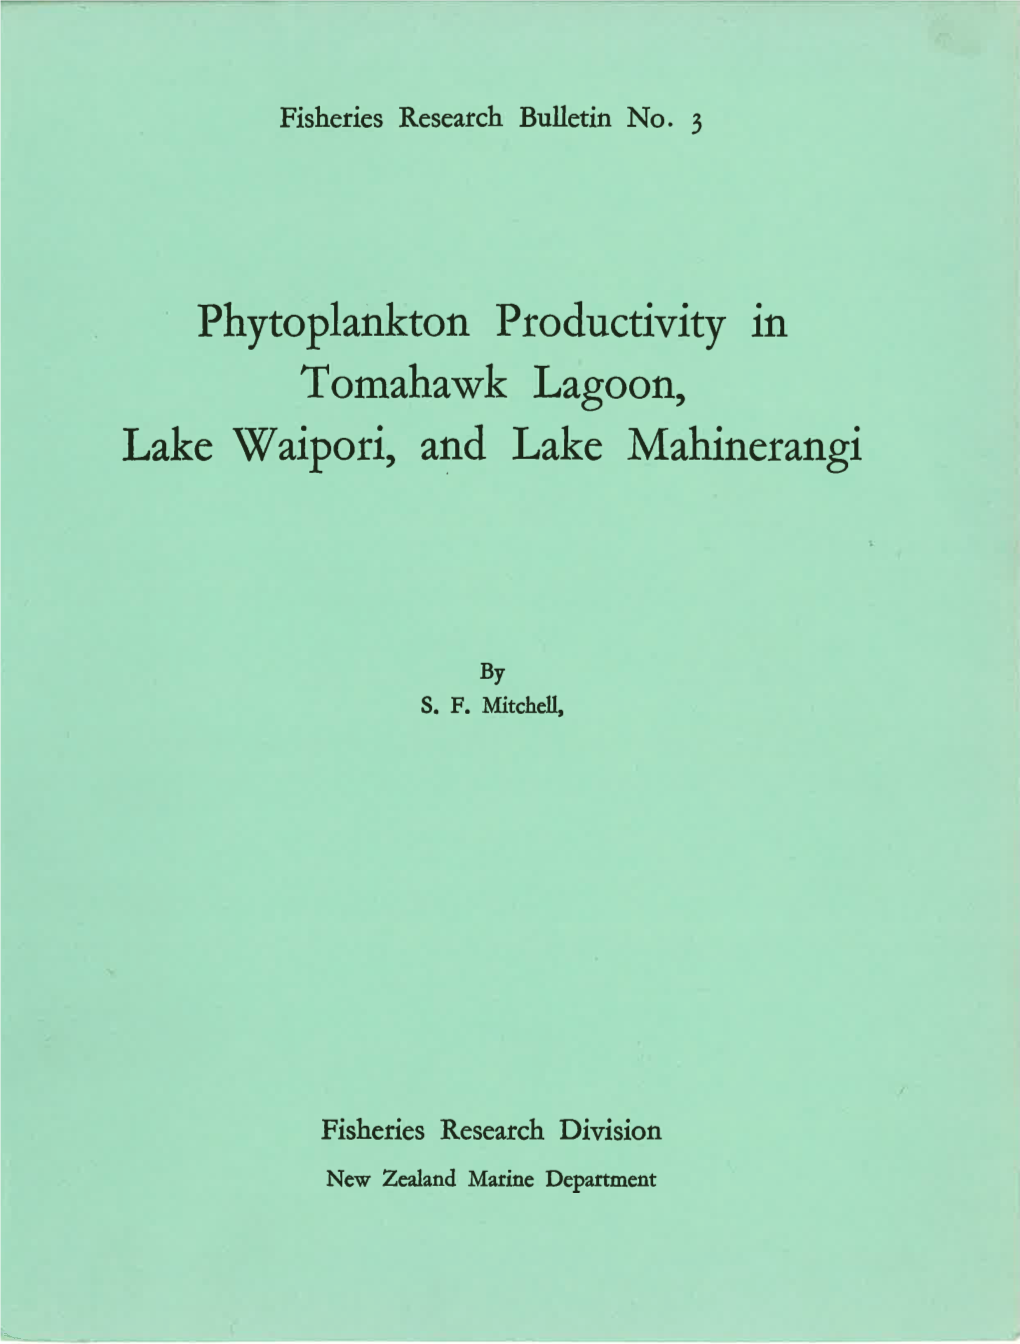 Phytoplankton Productivity in Tomahawk Lagoon, Lake Waipori, and Lake Mahinerangi